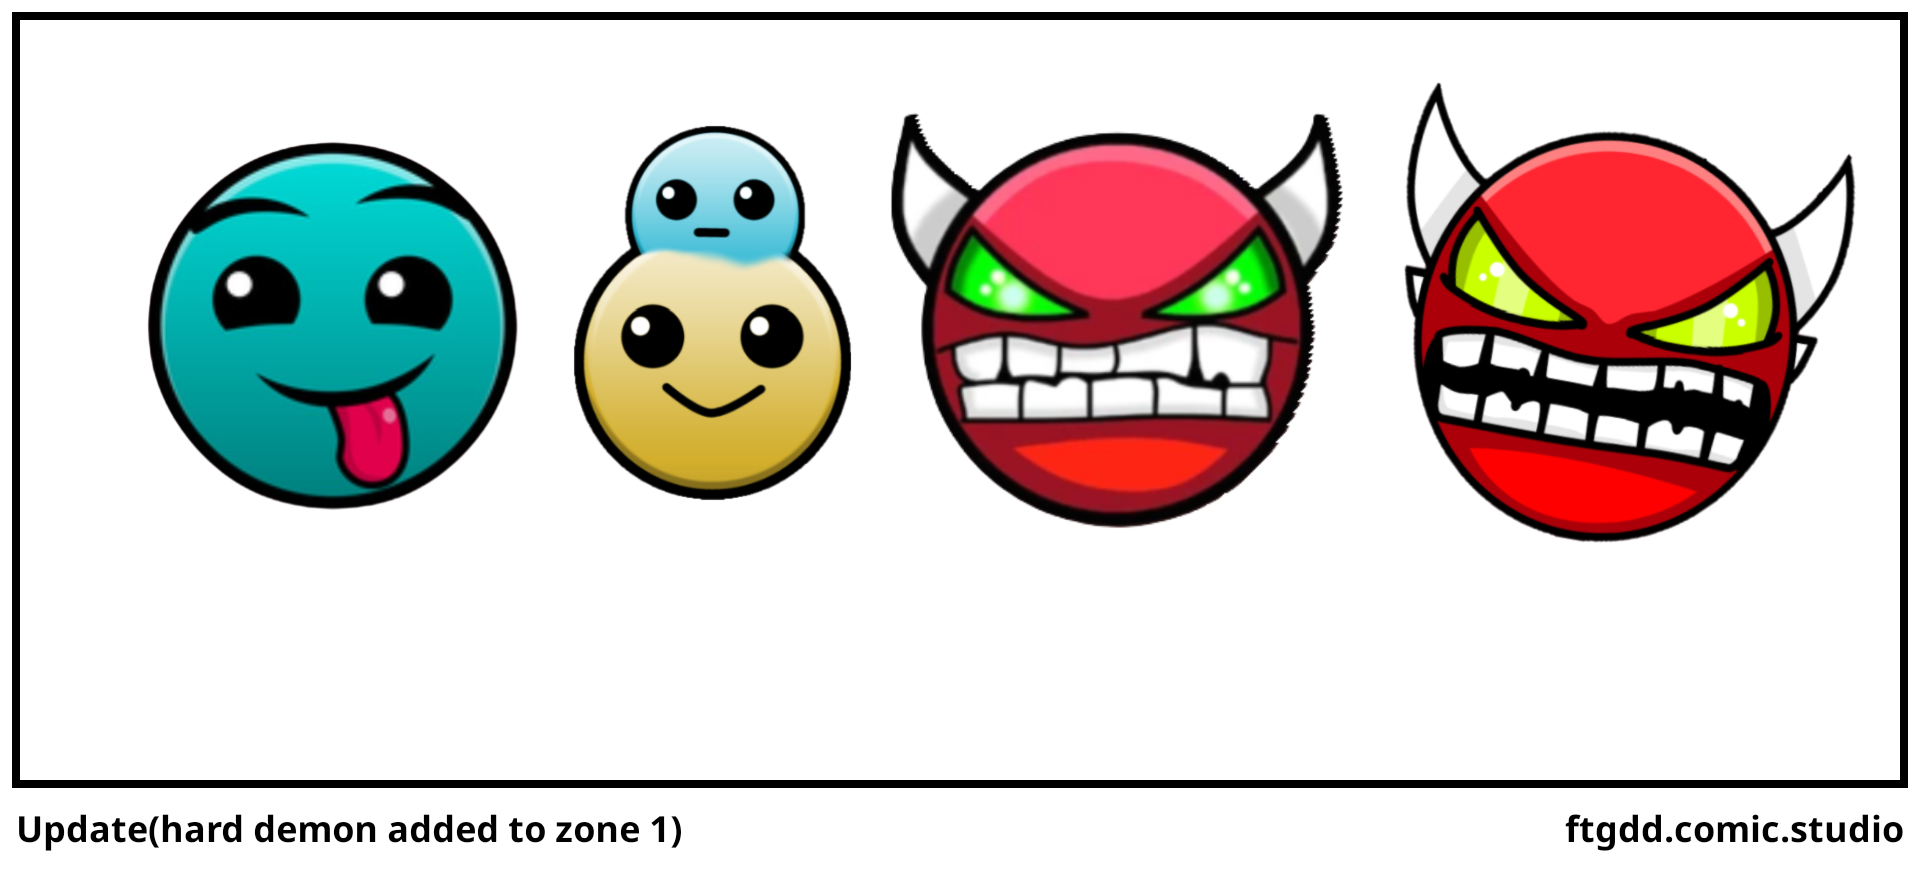 Update(hard demon added to zone 1)